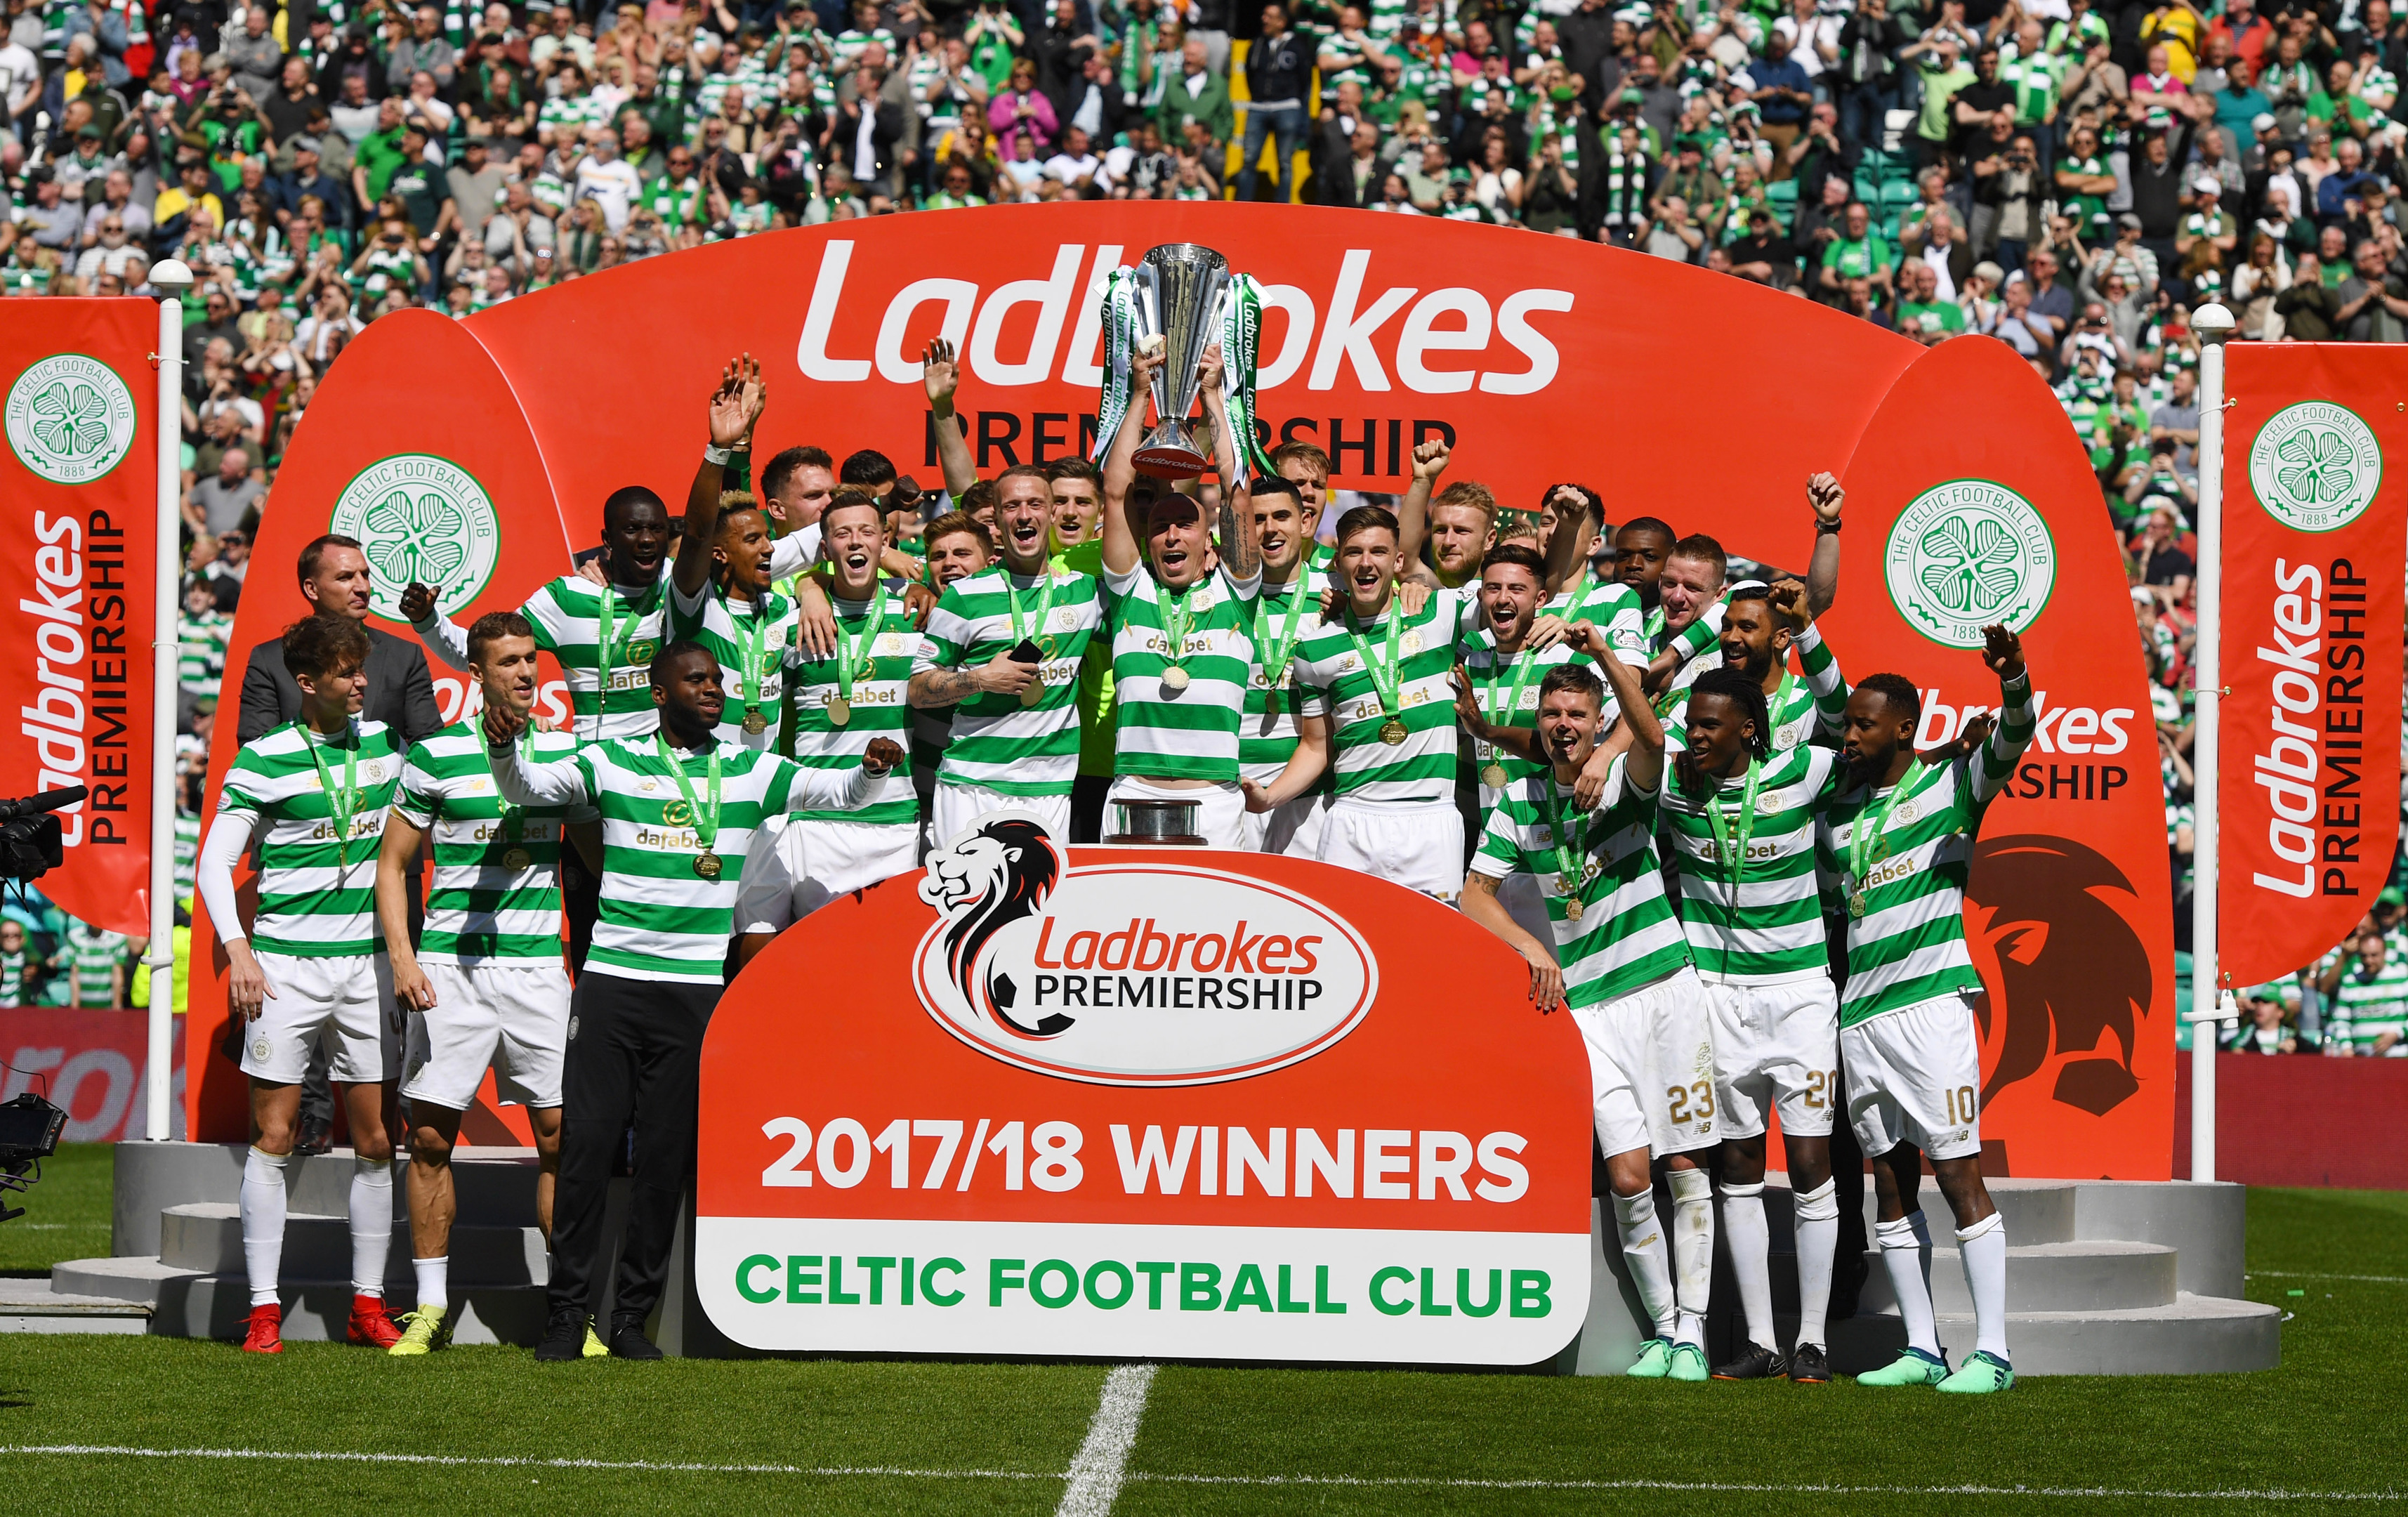 Celtic celebrate winning the Ladbrokes Premiership title.